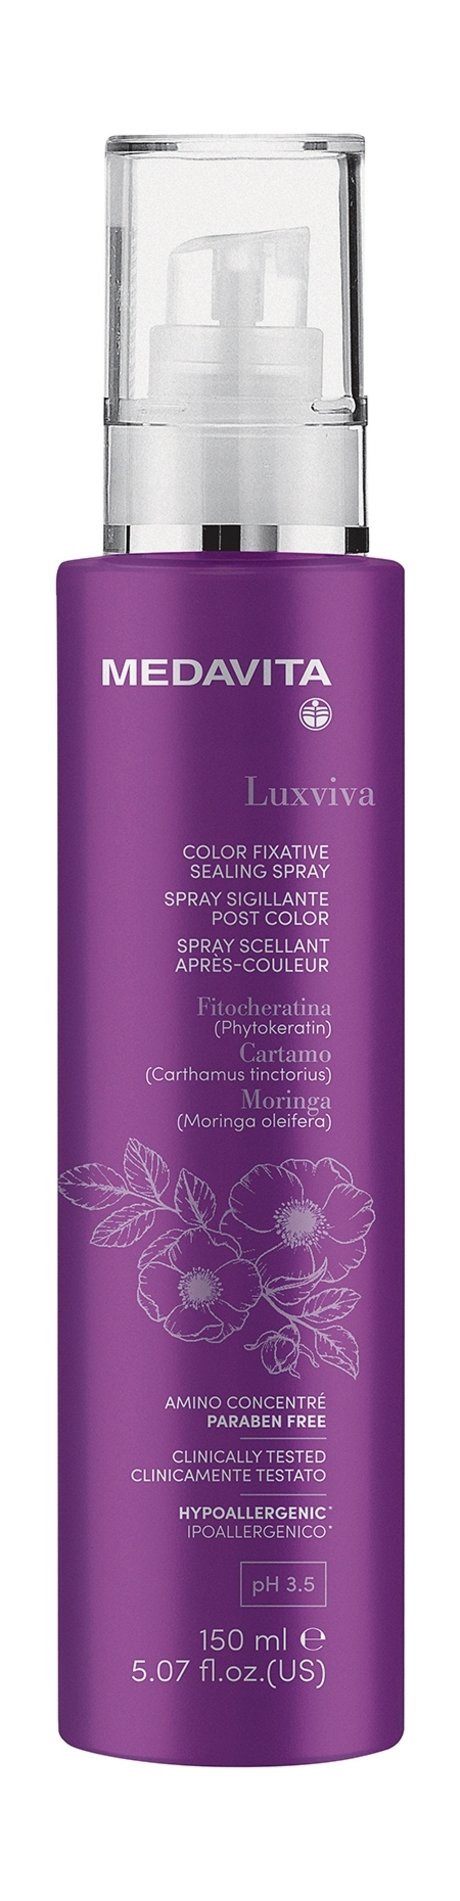 medavita luxviva color fixative sealing spray